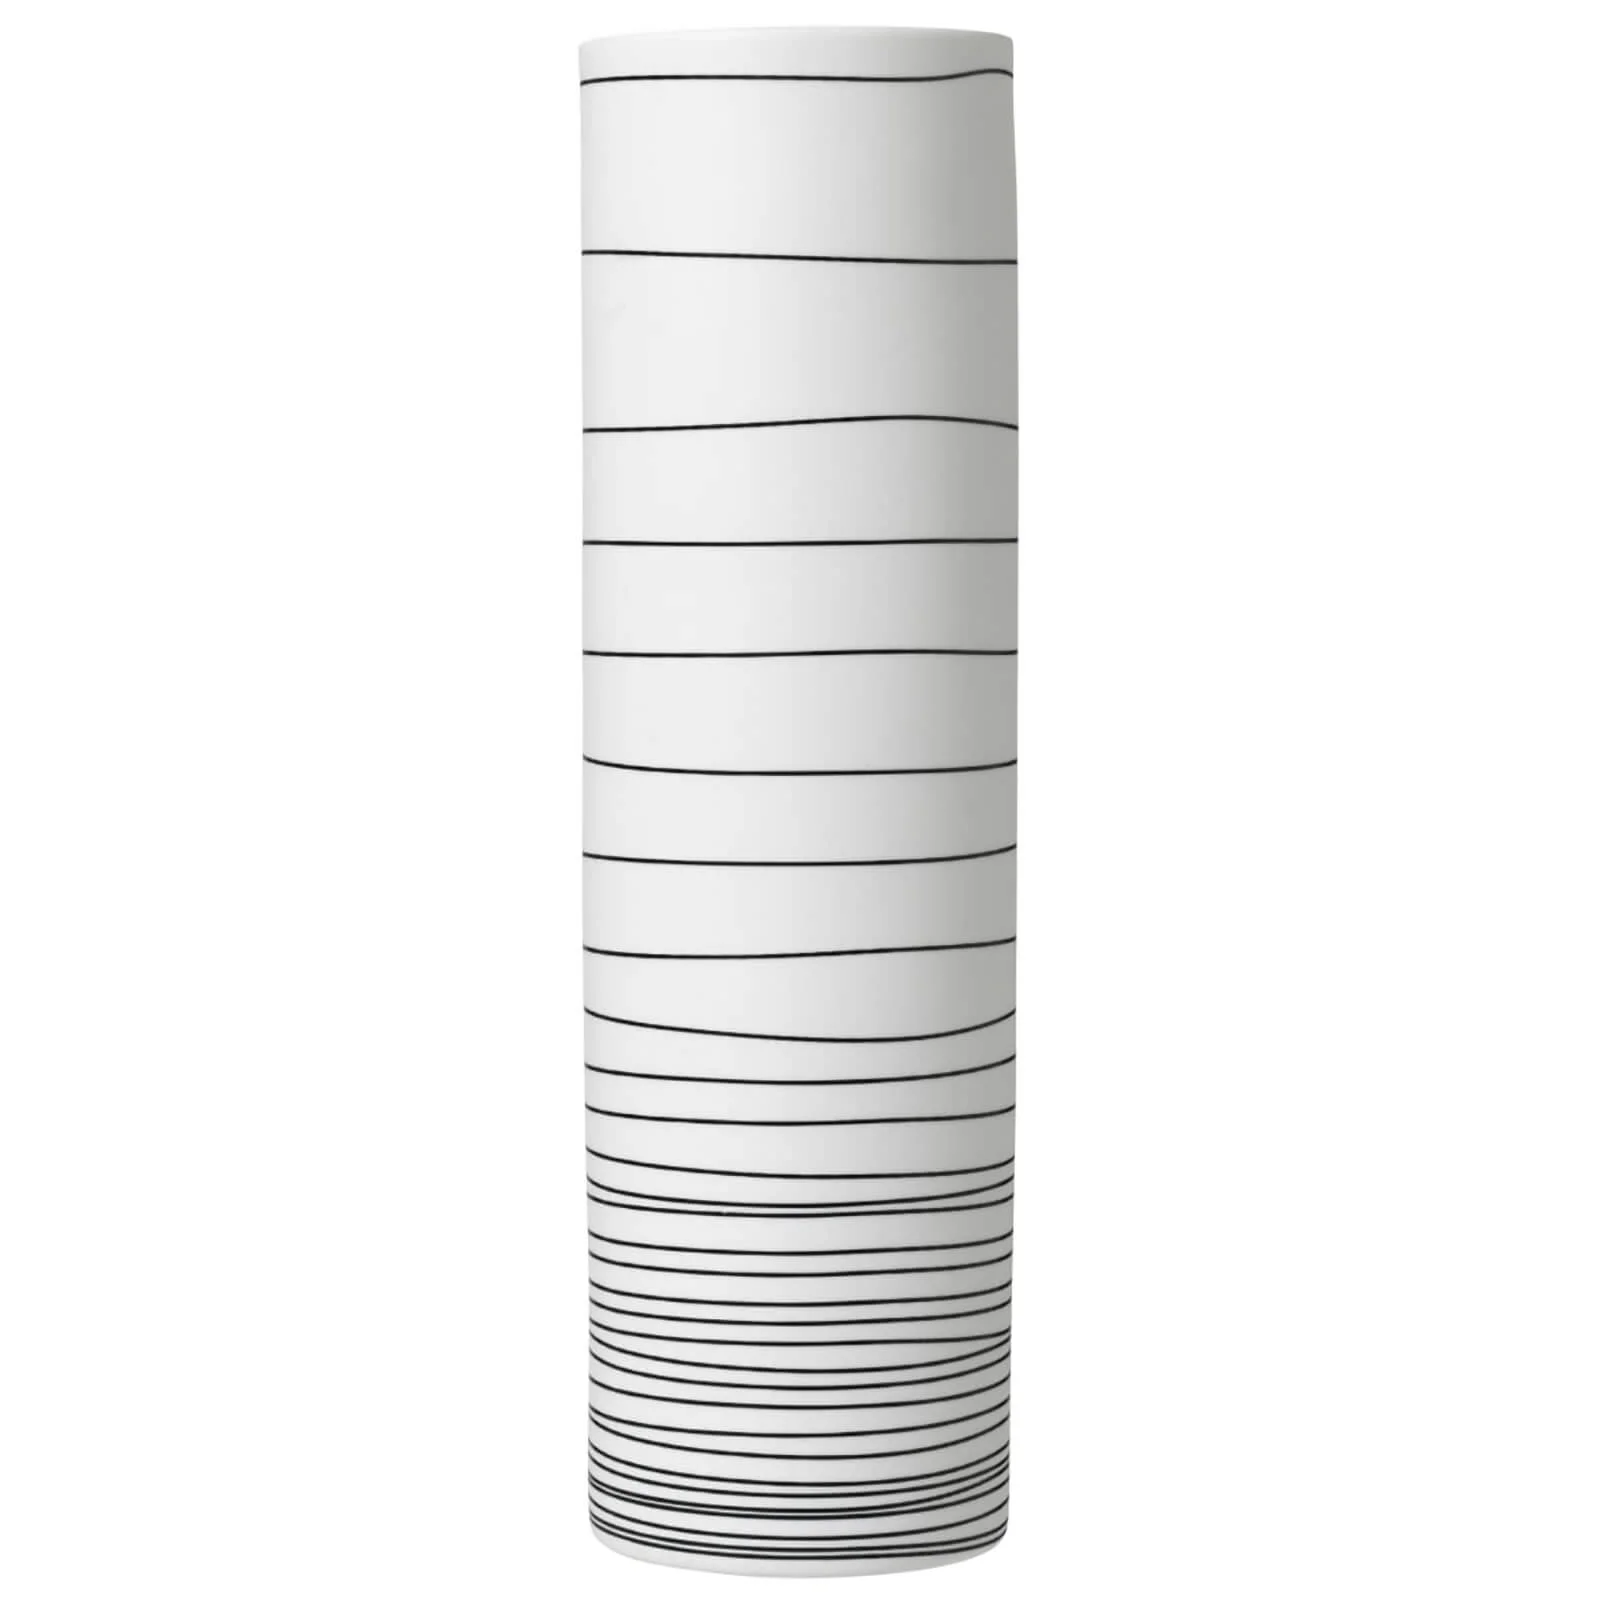 Blomus Zebra Vase - Small Image 1